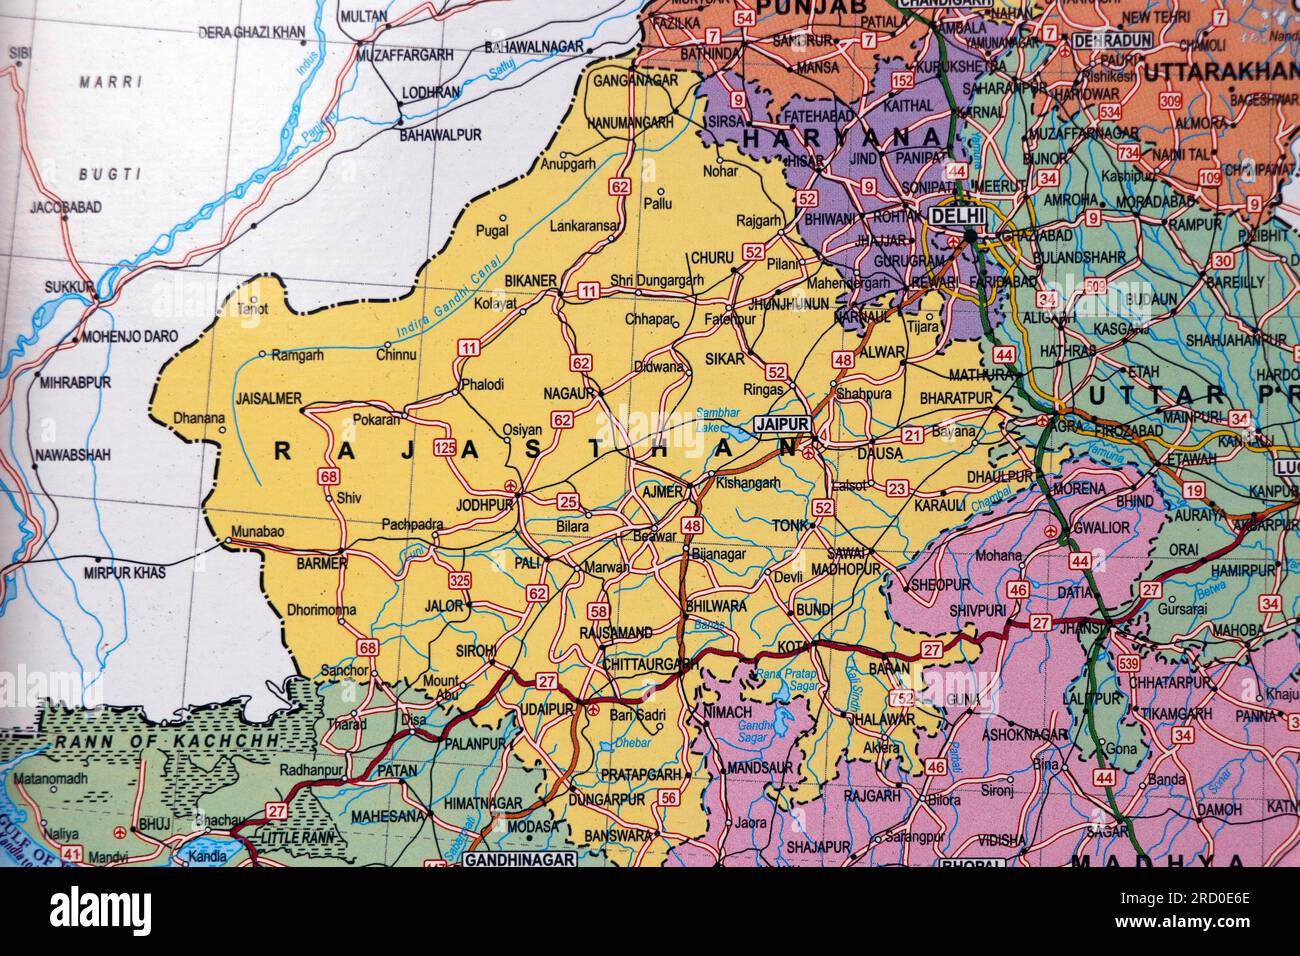 north india map with rajasthan state borders,punjab, haryana in close u Stock Photo